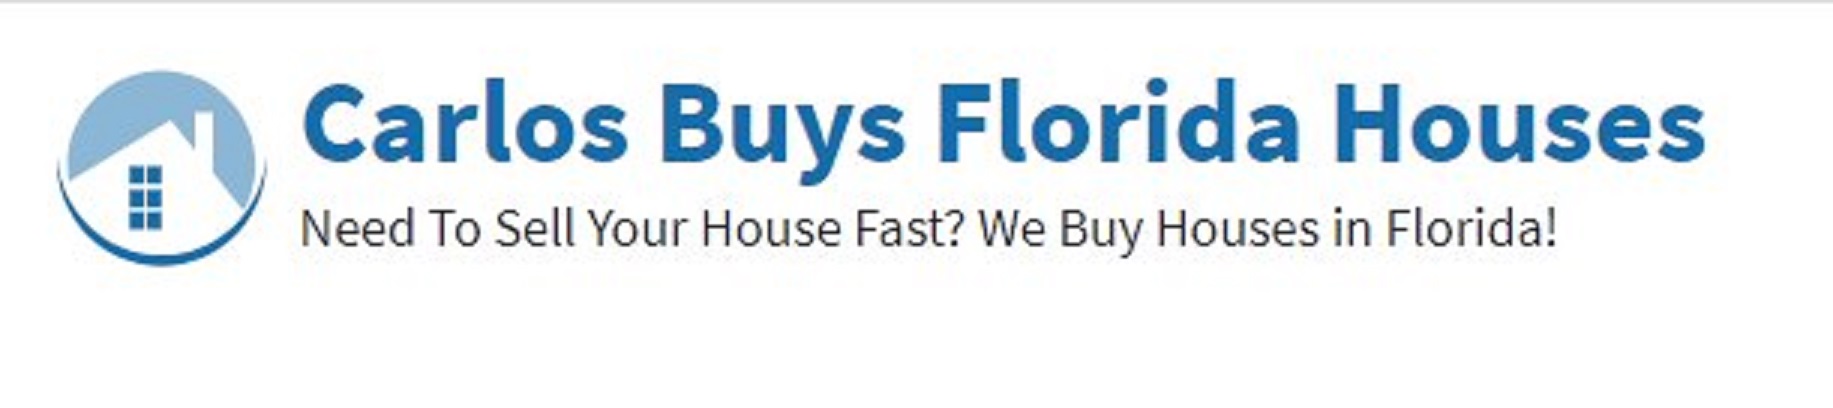 Carlos Buys Florida Houses